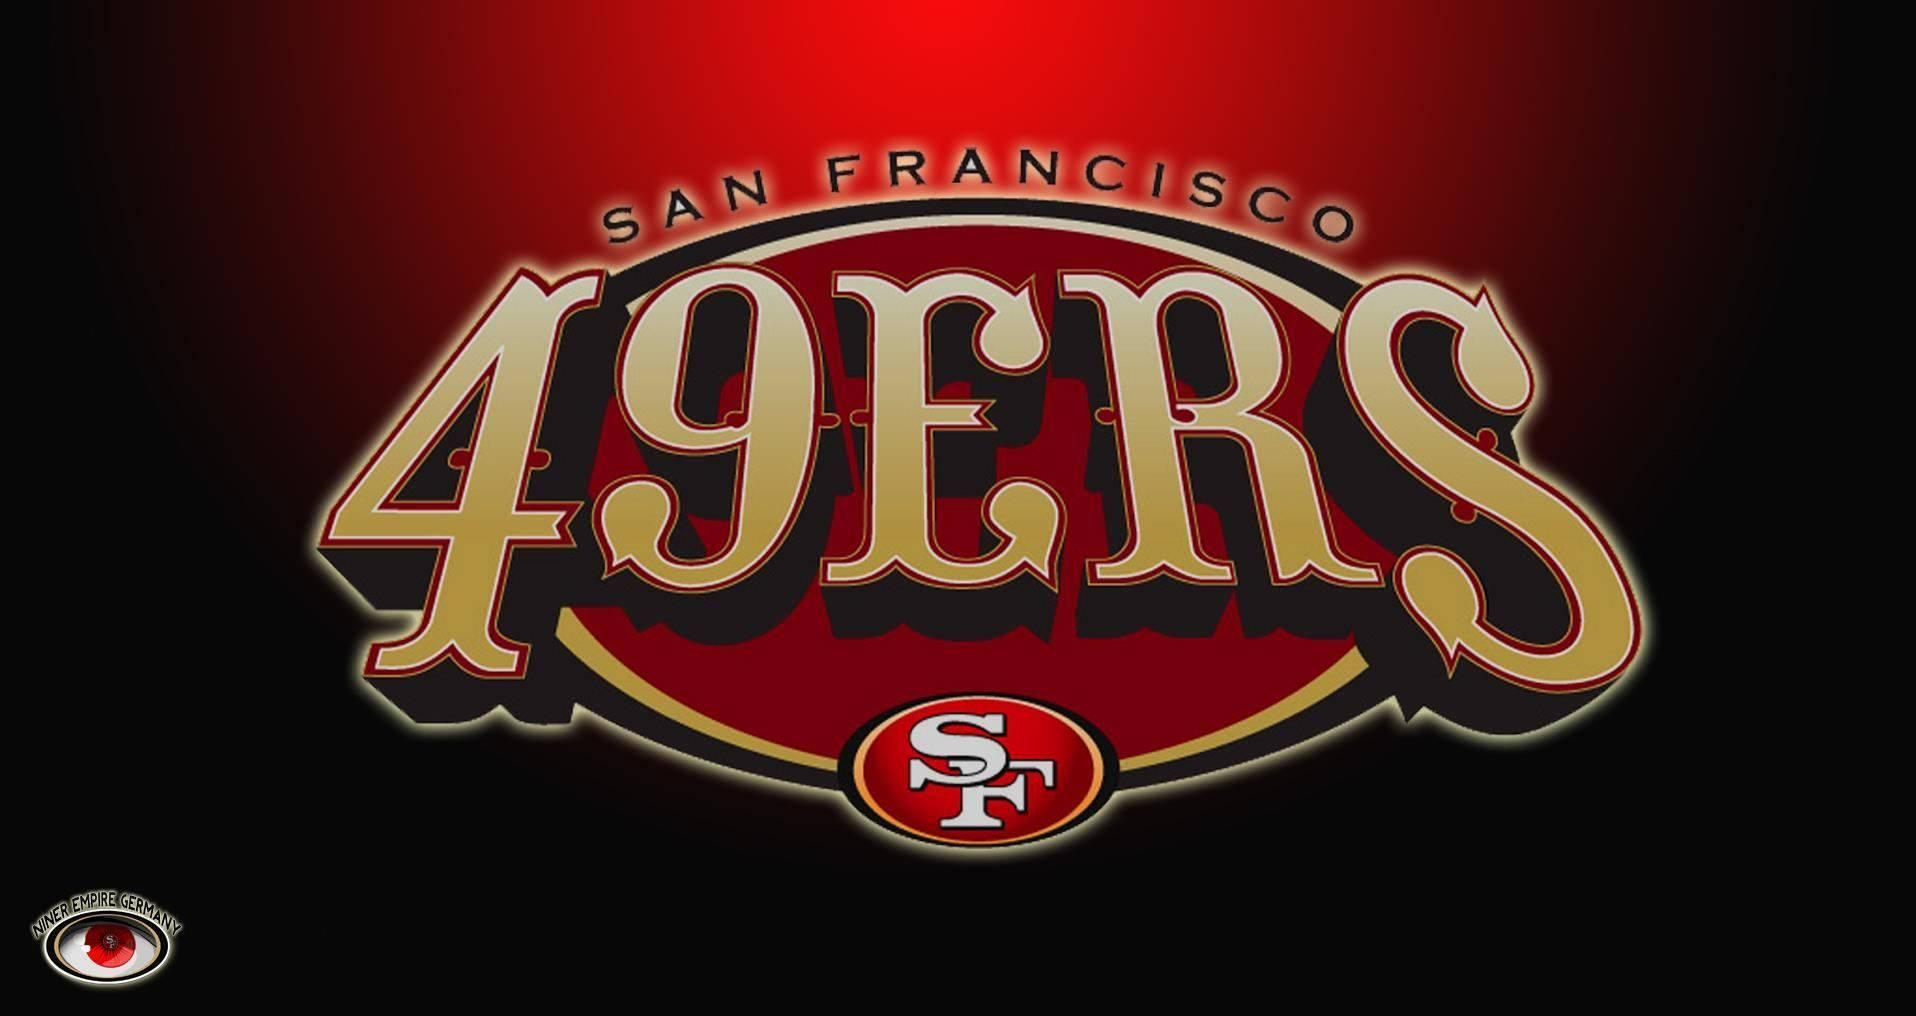 San Francisco 49ers - Symbol of Pride and Passion Wallpaper